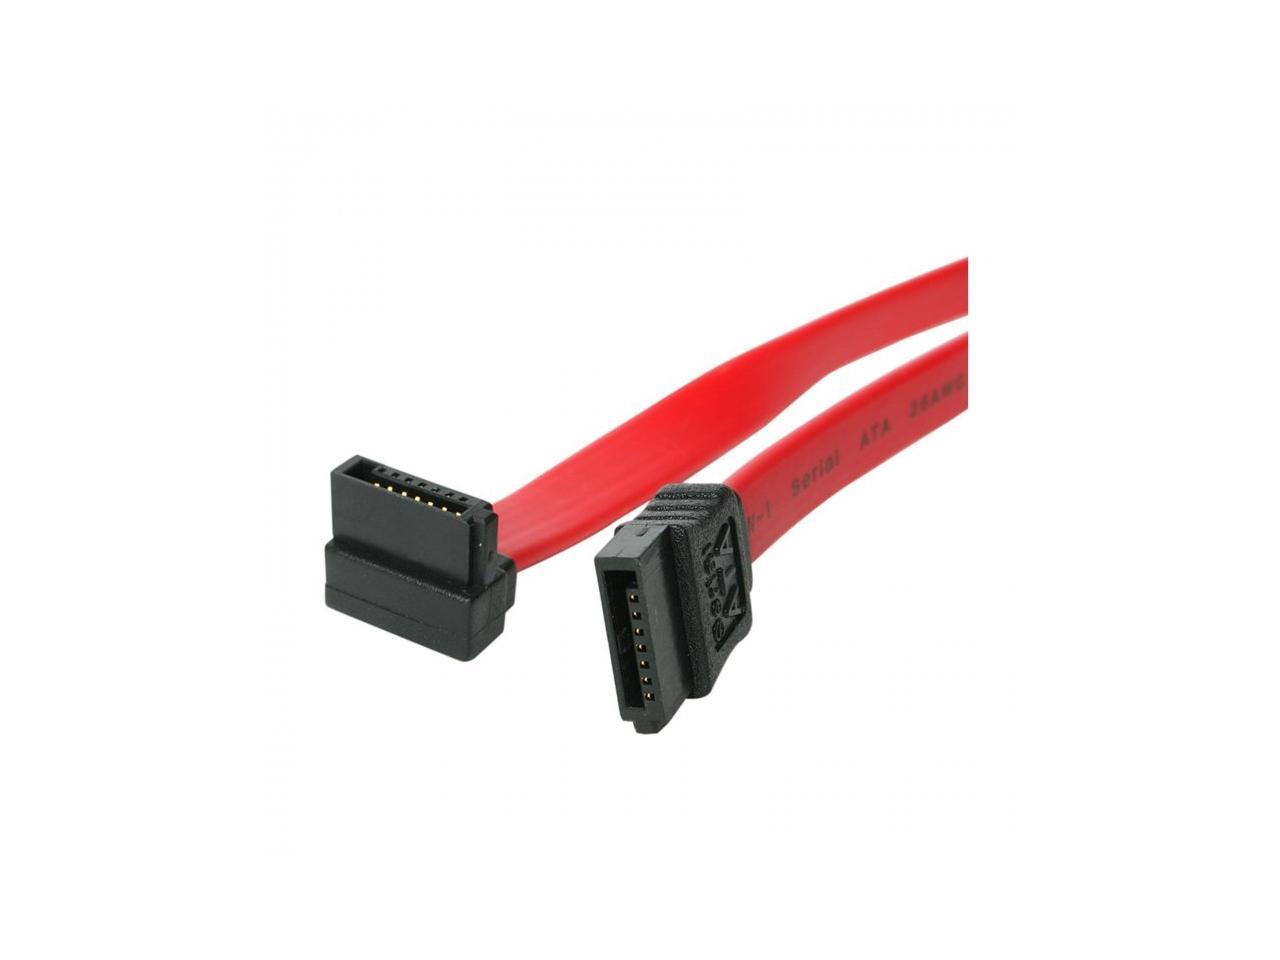 NEON SATA Cable Serial ATA 7-pin Internal Angled Cable Red 40cm. Model NQ-SC002-90DEG